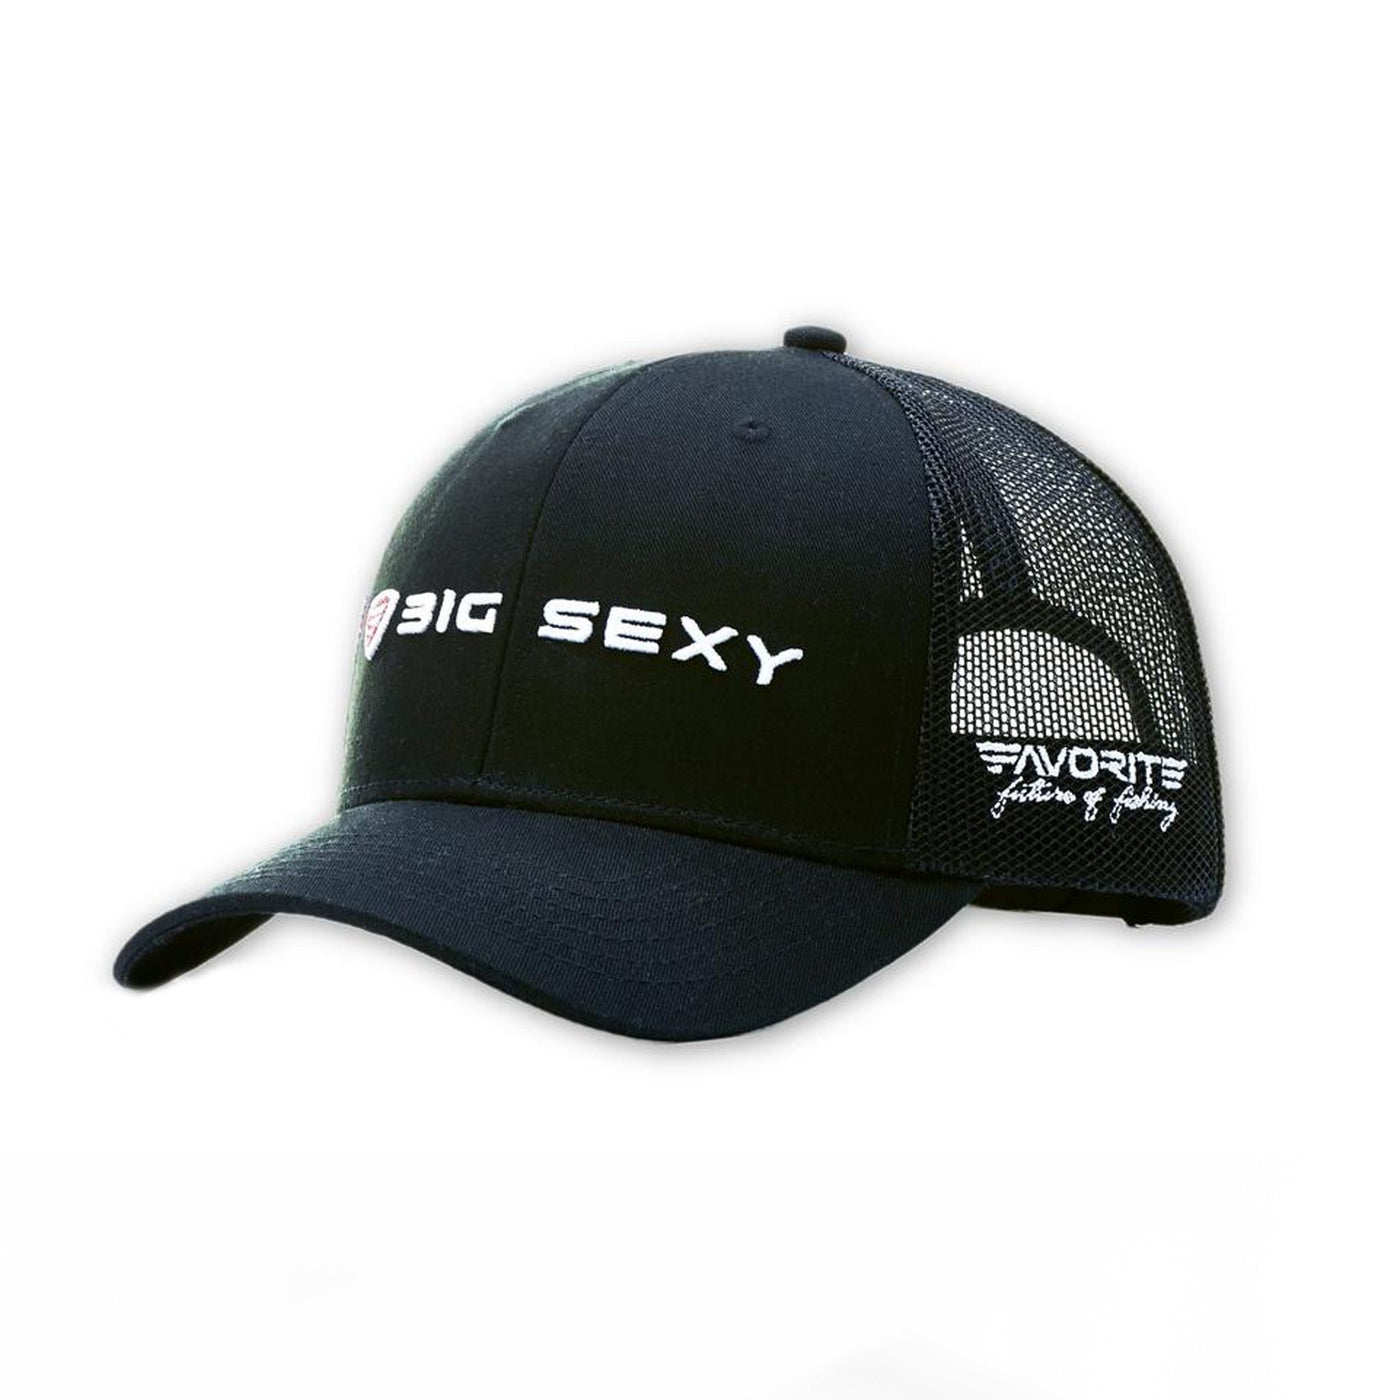 Big Sexy Trucker Hat Favorite Fishing